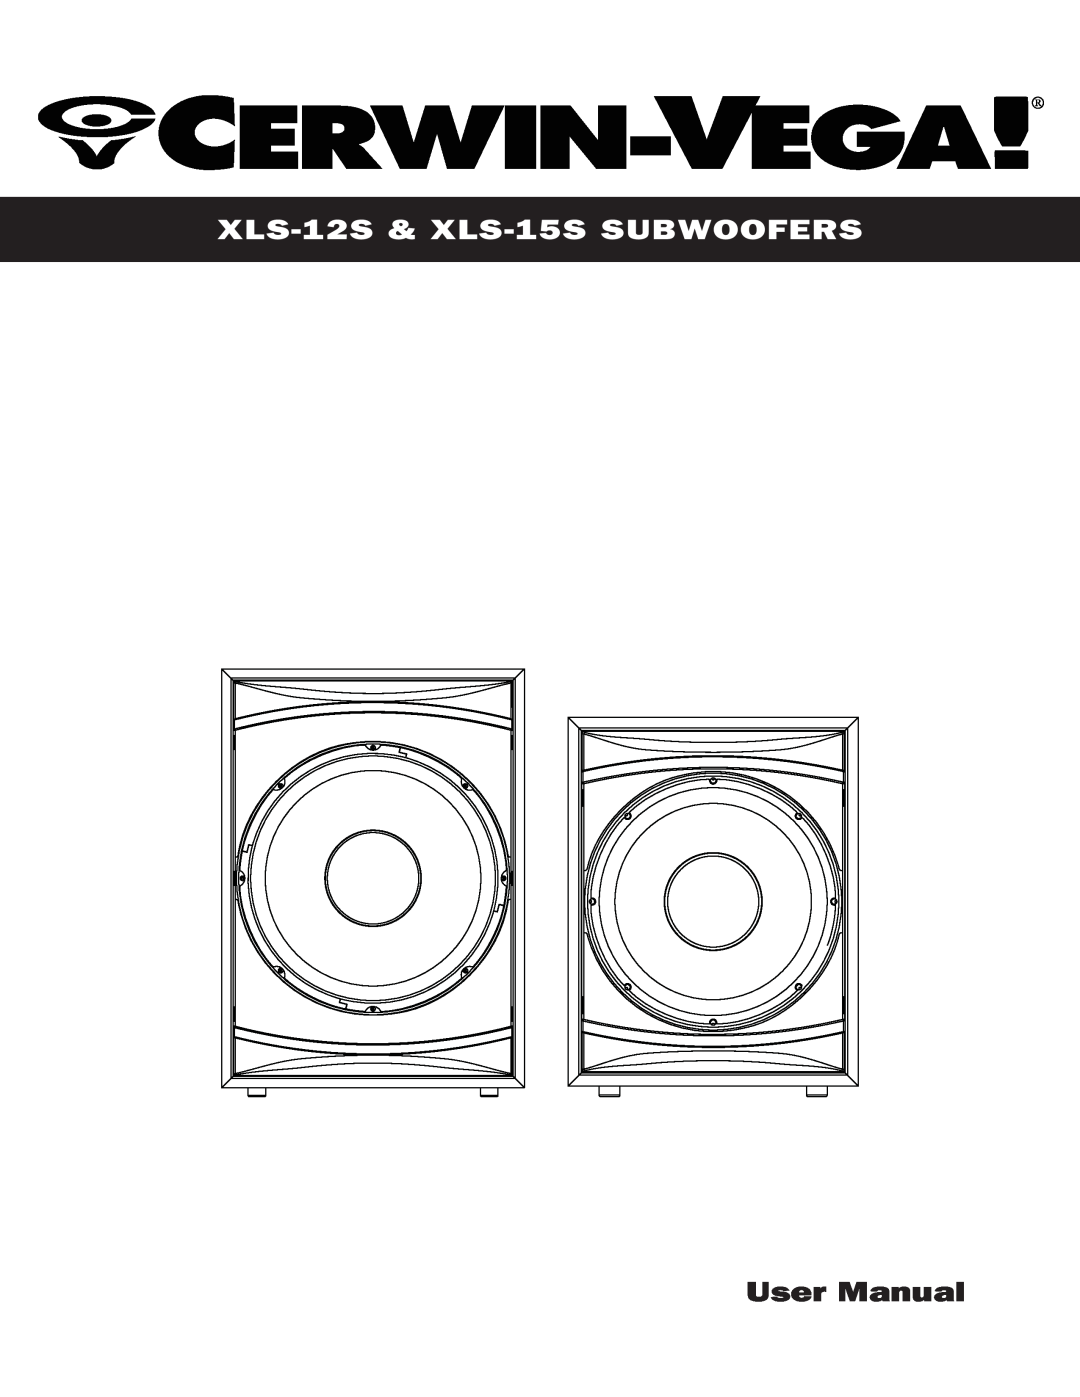 Cerwin-Vega user manual XLS-12S& XLS-15SSUBWOOFERS 